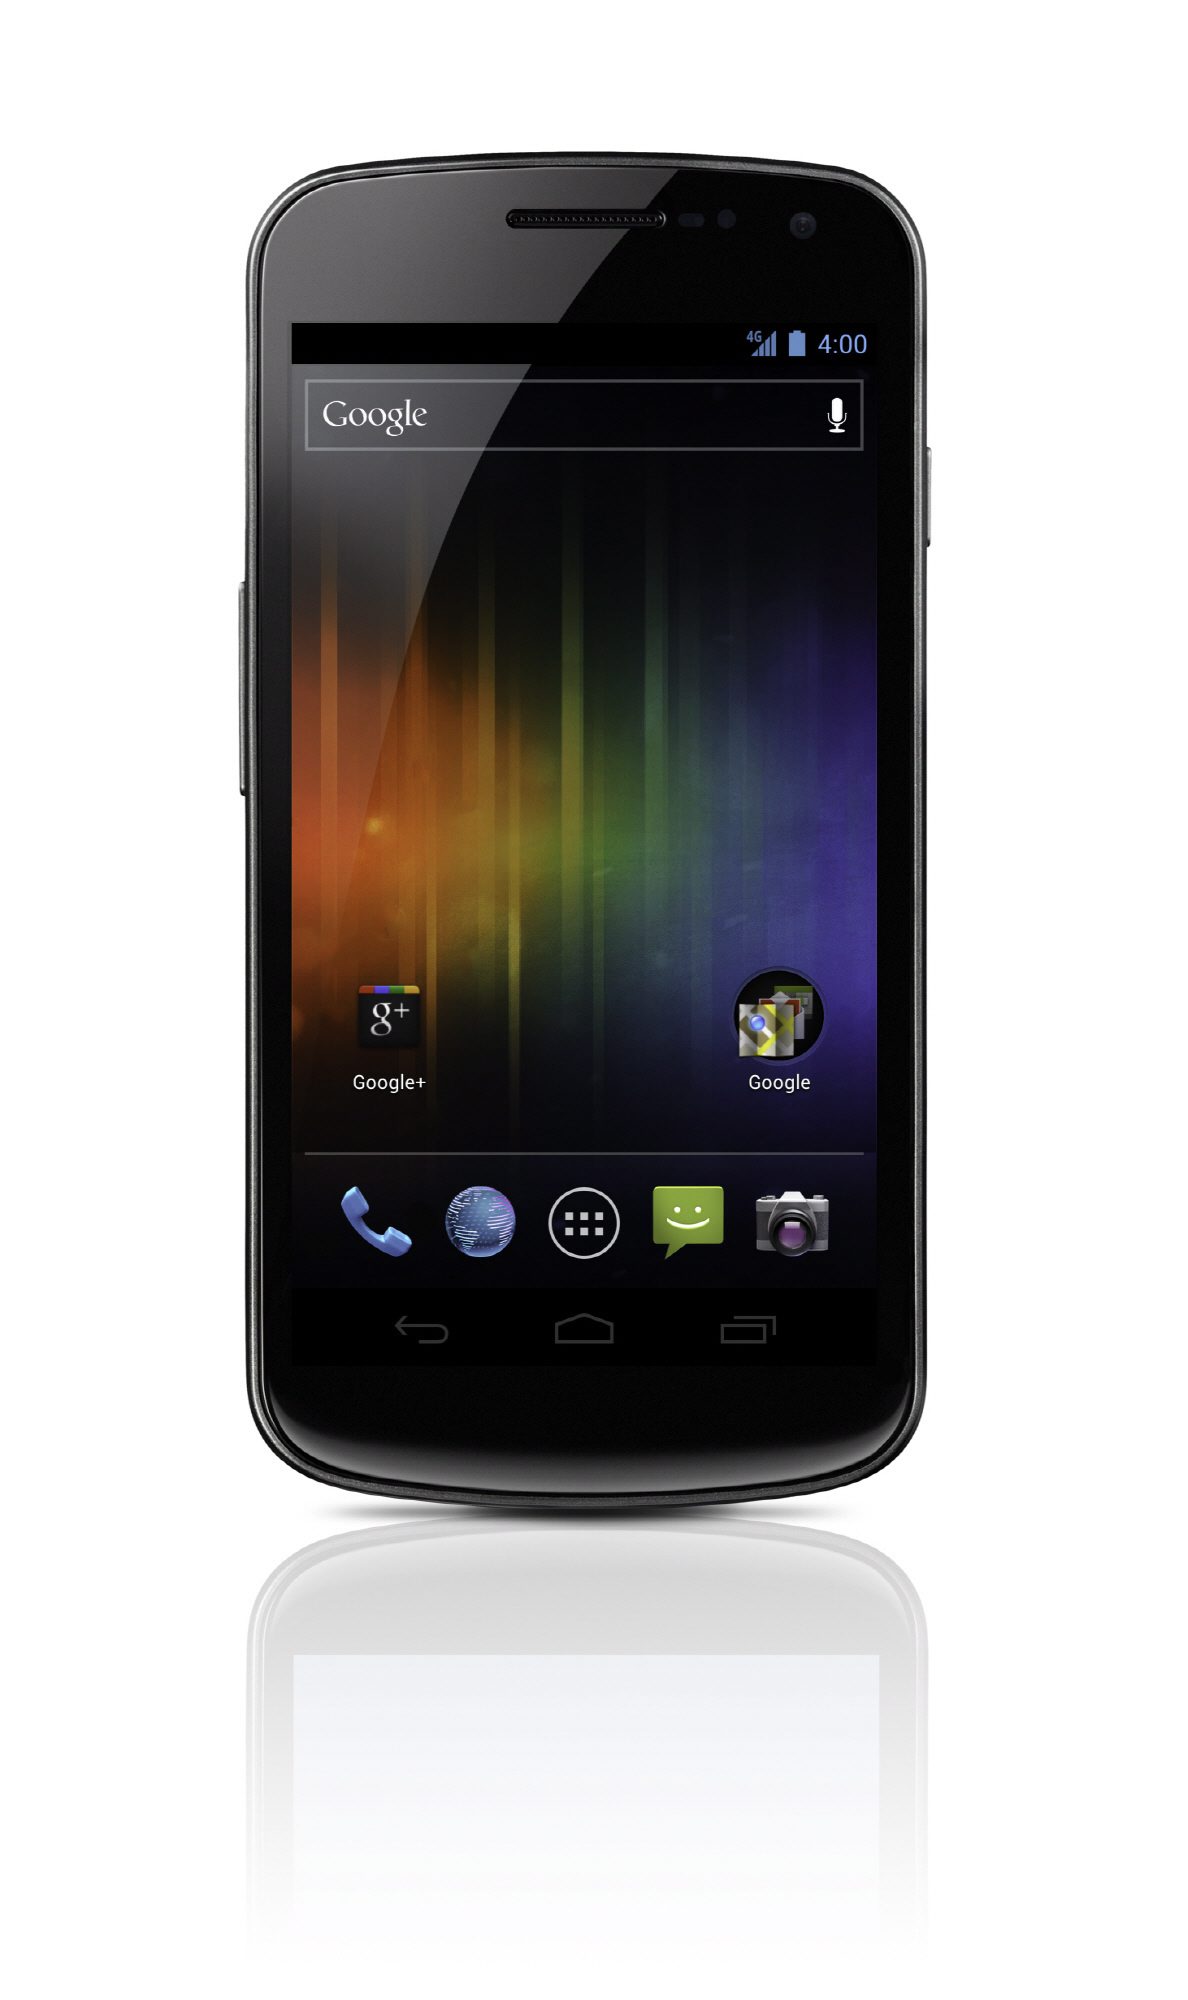 Samsung показа новия си смартфон Galaxy Nexus